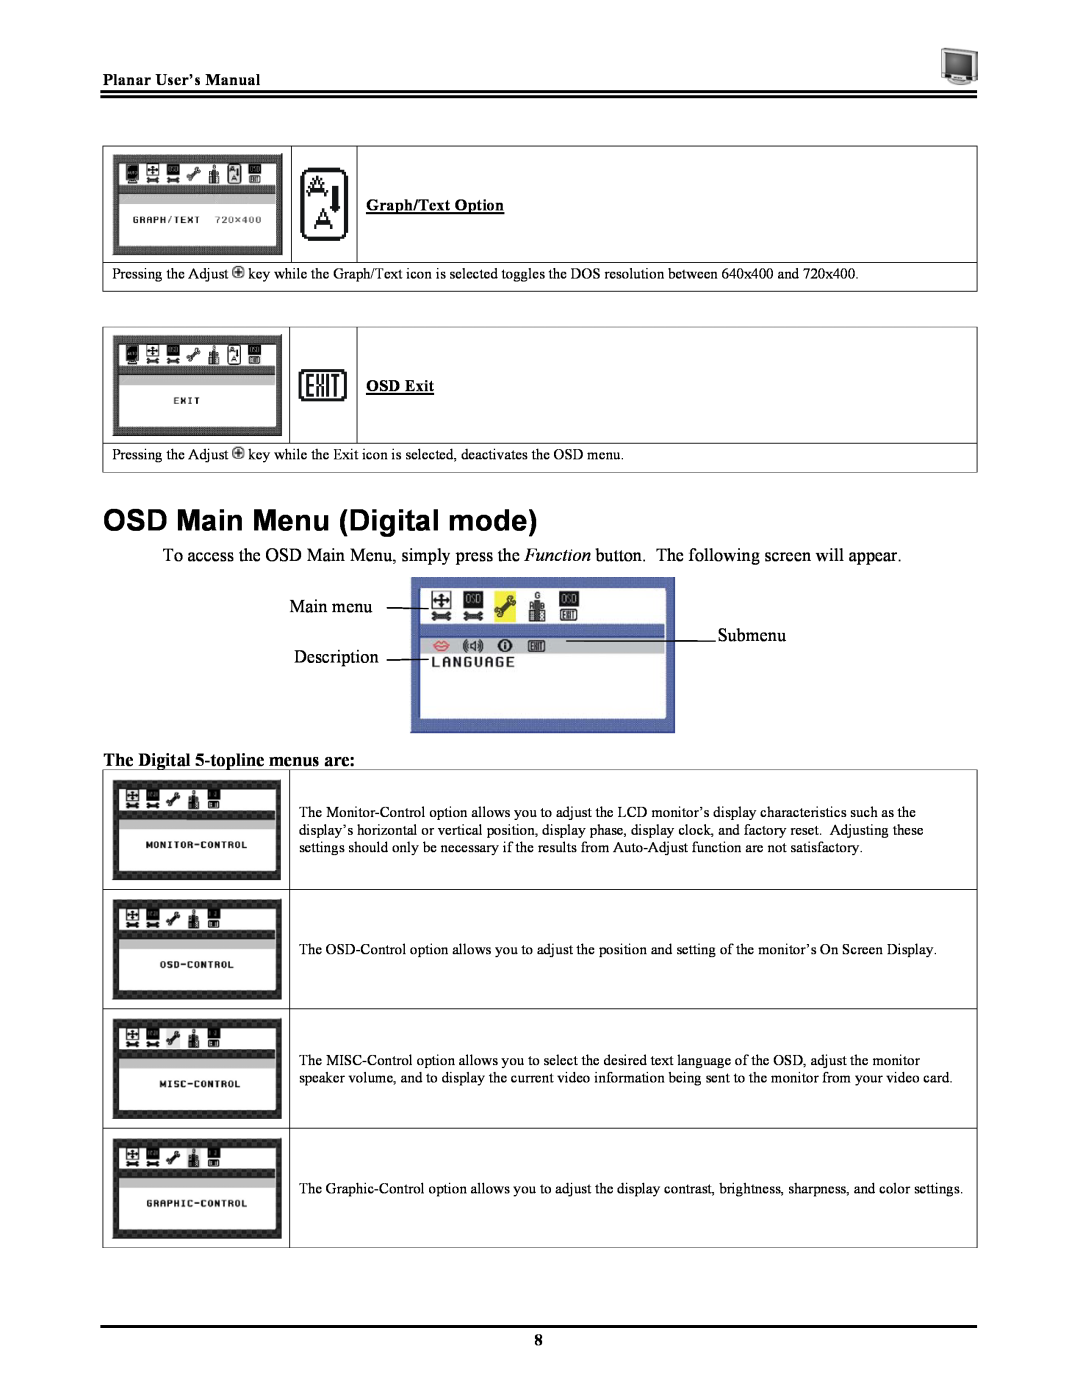 Planar CT1744NU manual OSD Main Menu Digital mode, The Digital 5-topline menus are, Planar User’s Manual Graph/Text Option 